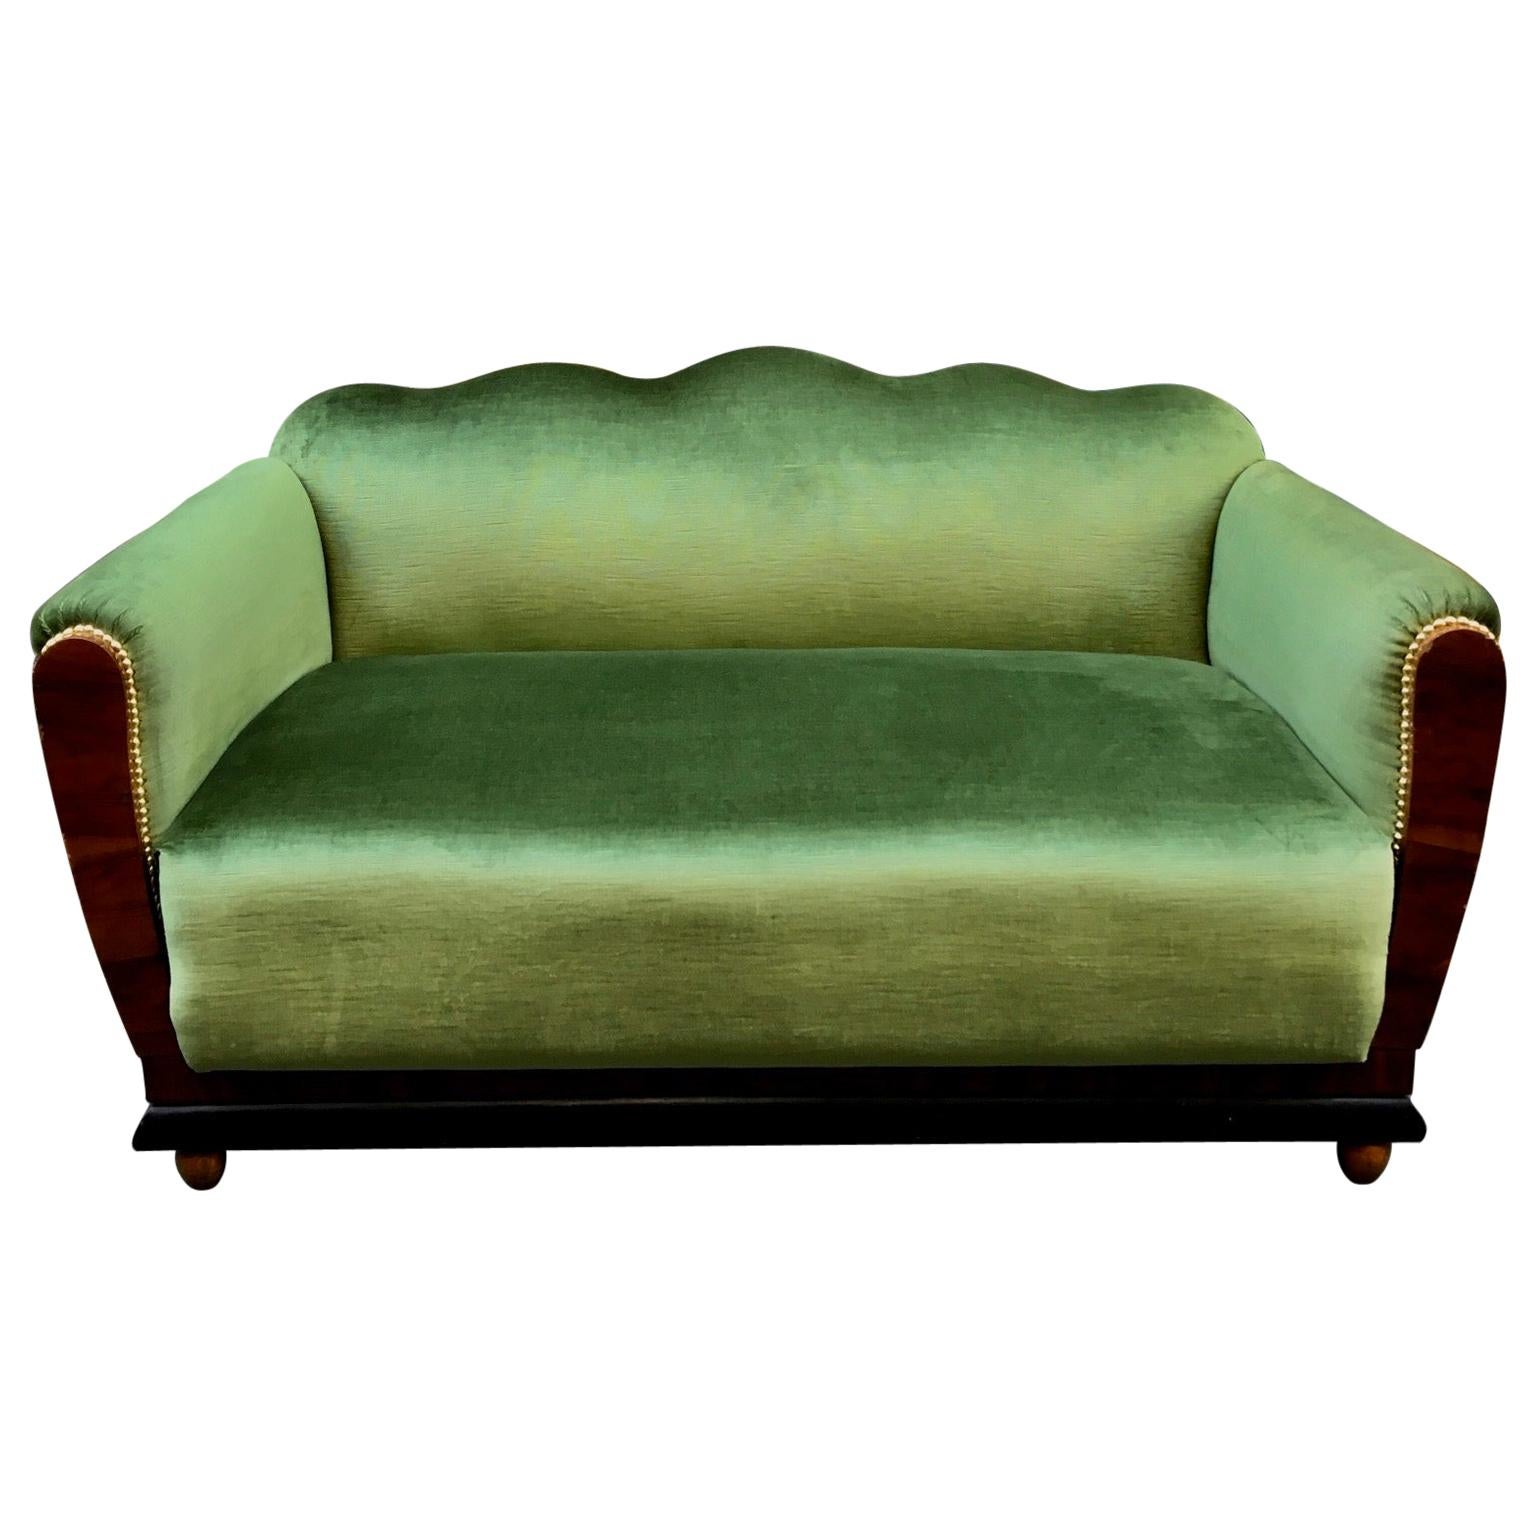 Small Art Deco Sofa Newly Upholstered with Acid Green Velvet, 1940s